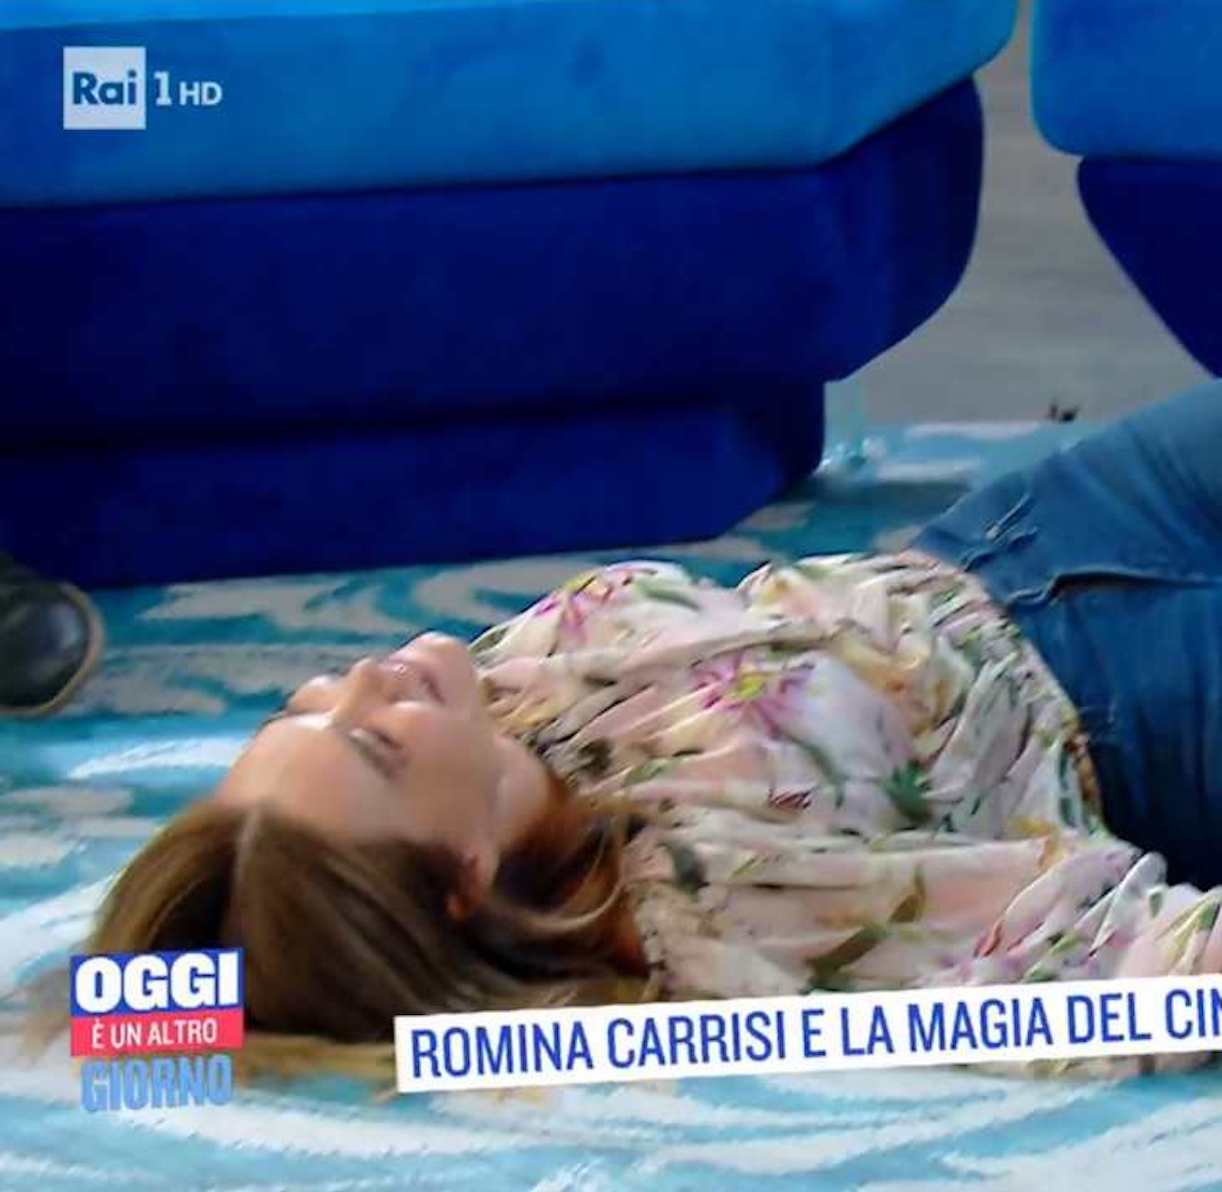 Romina Carrisi bacio emanuel caserio